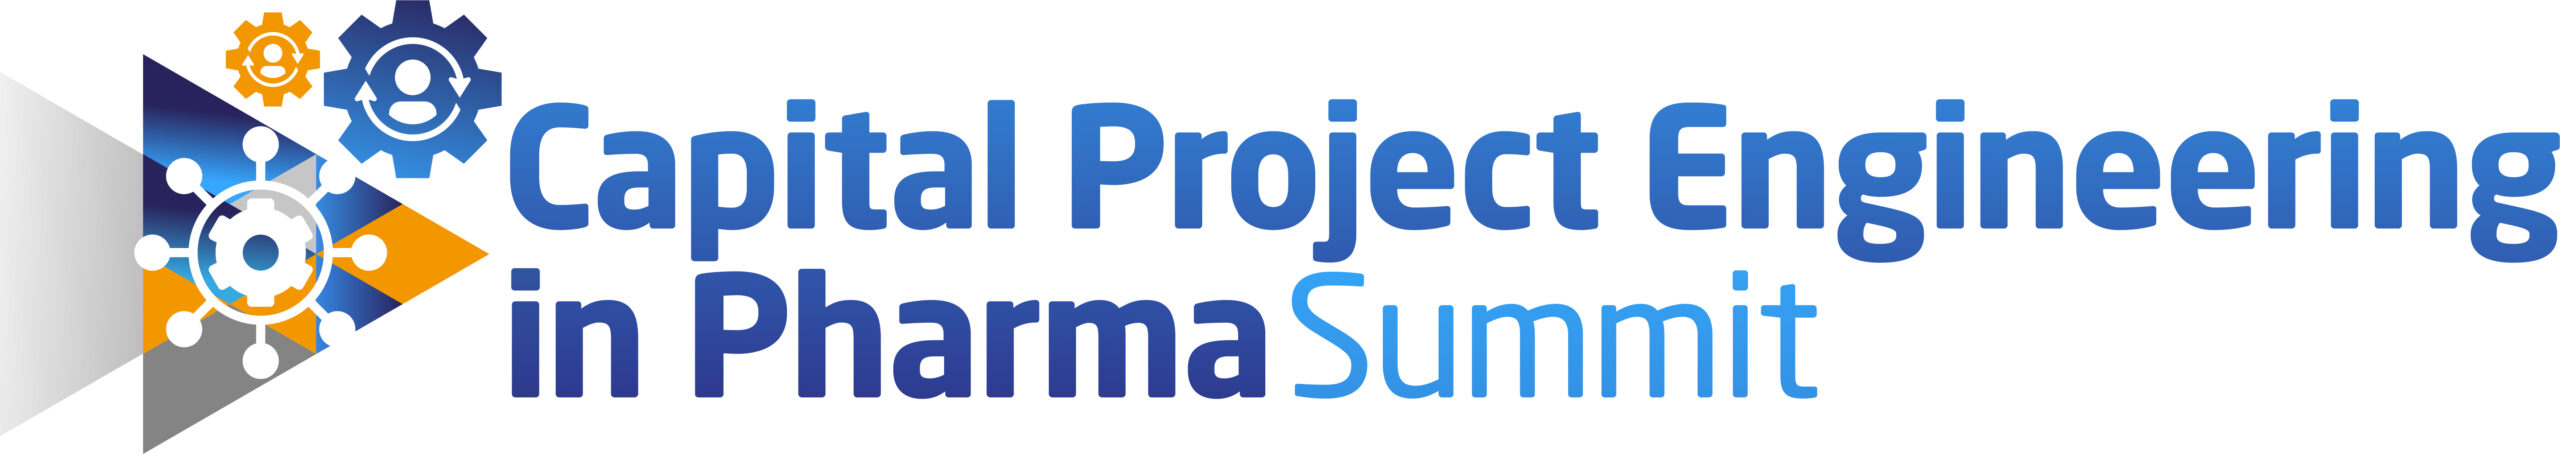 Capital Project Engineering in Pharma Summit logo